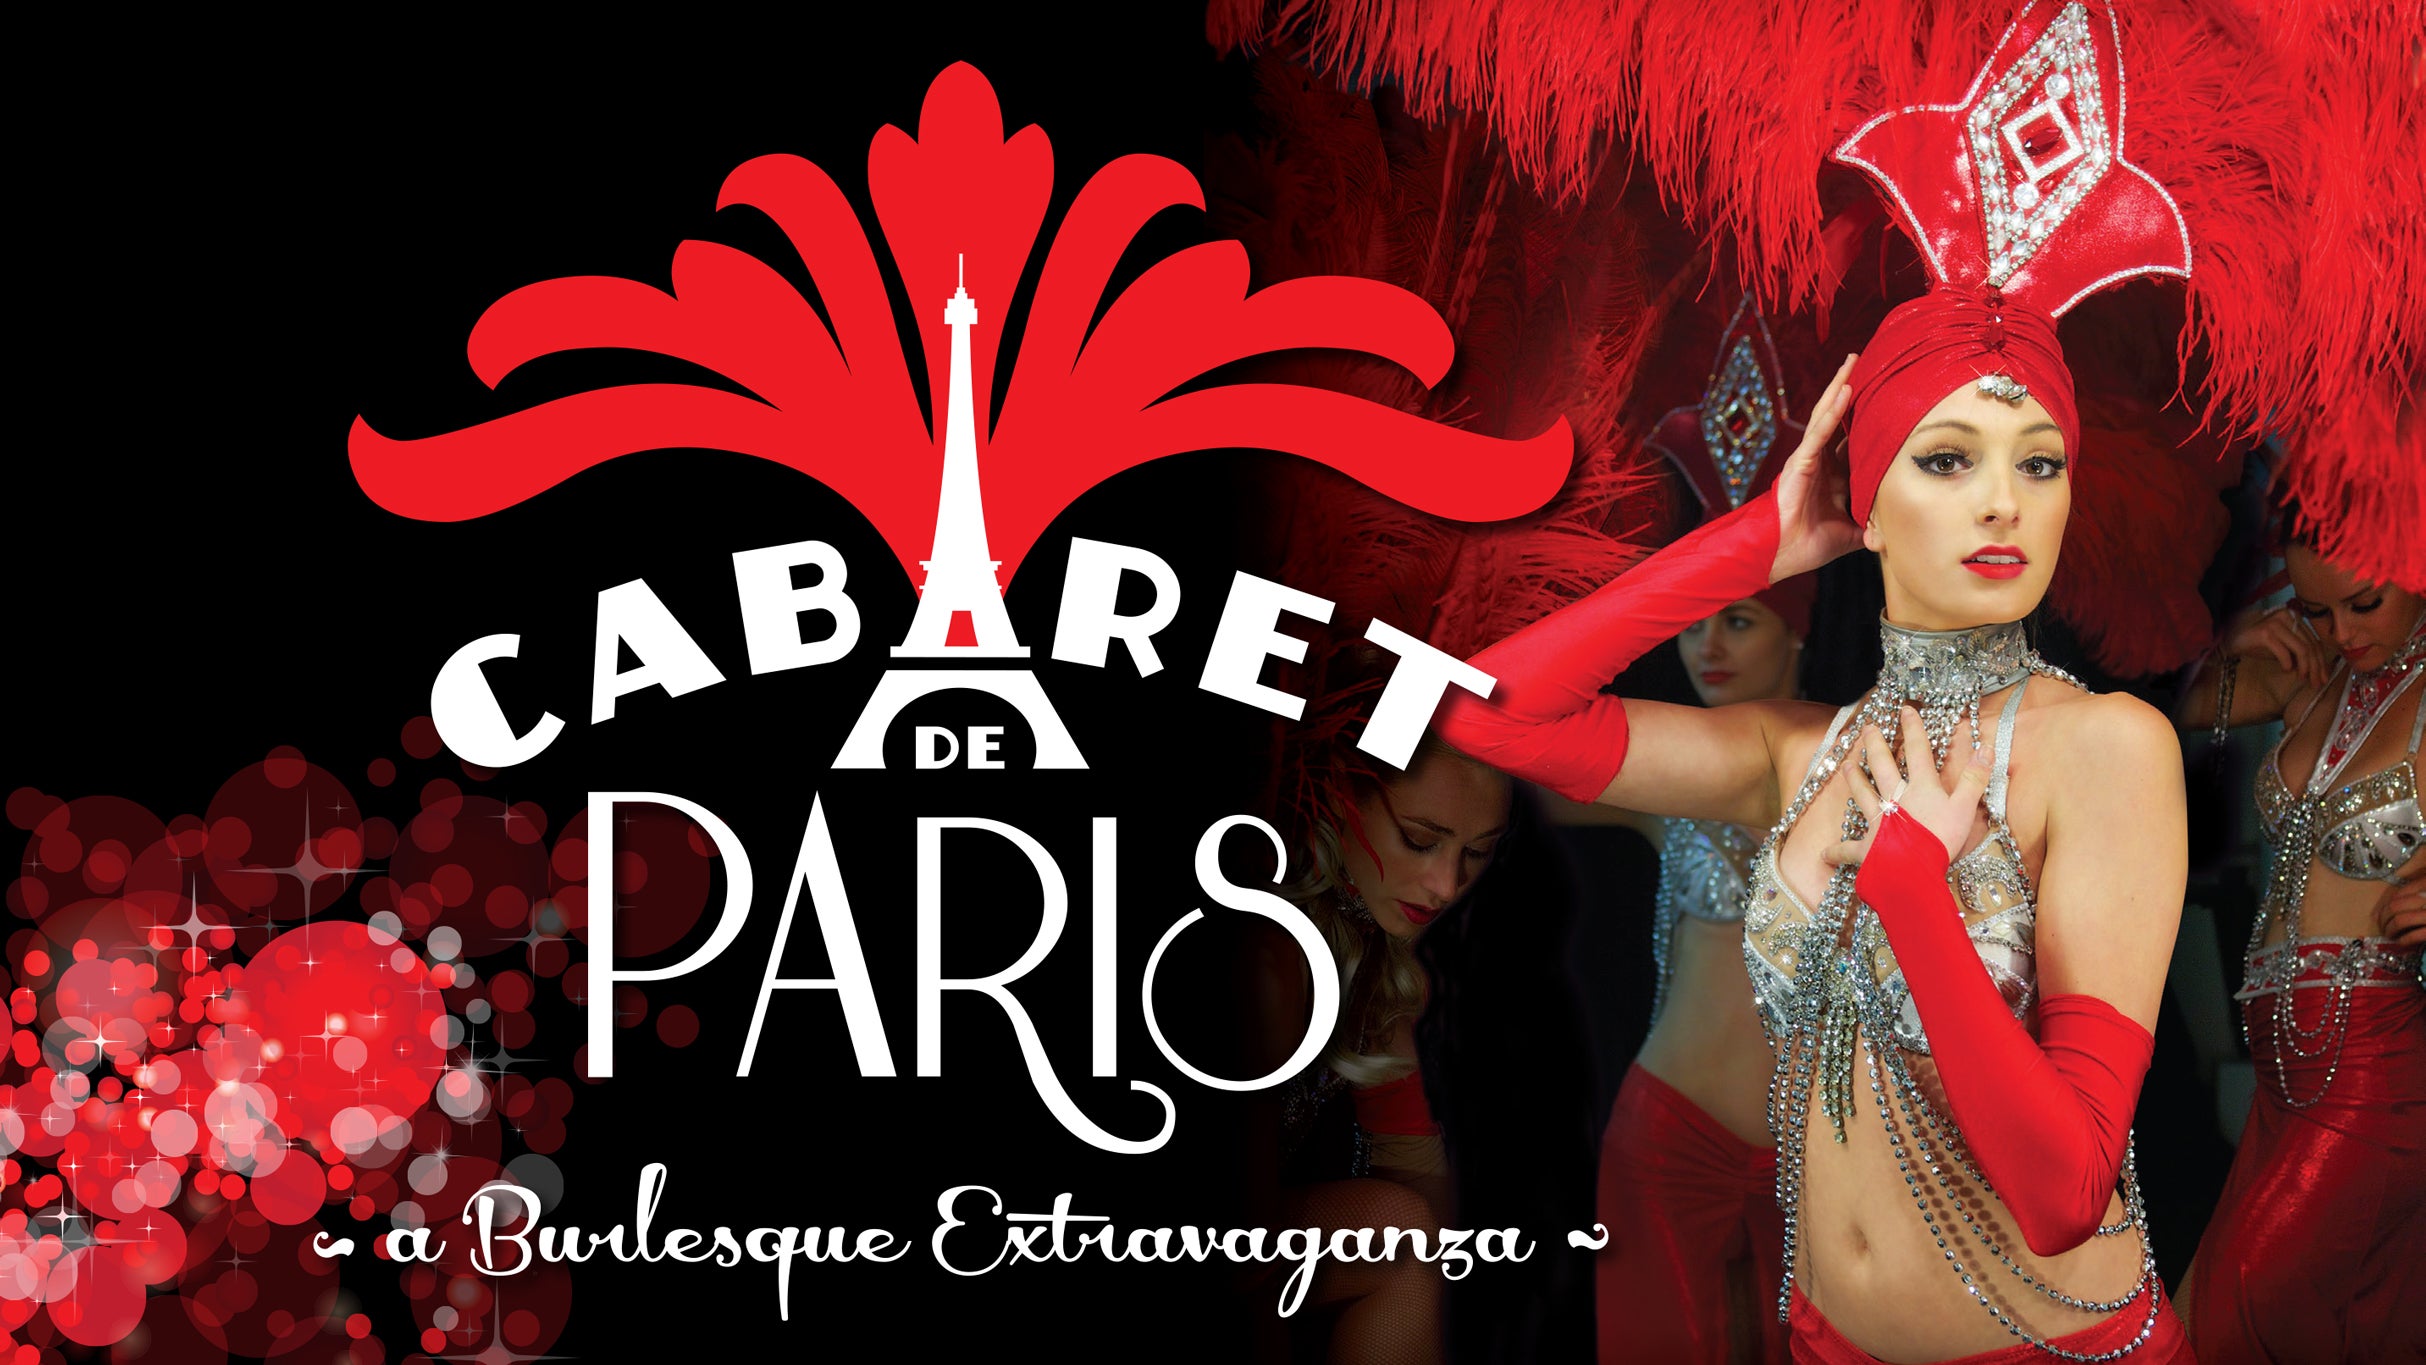 Cabaret de Paris presale information on freepresalepasswords.com